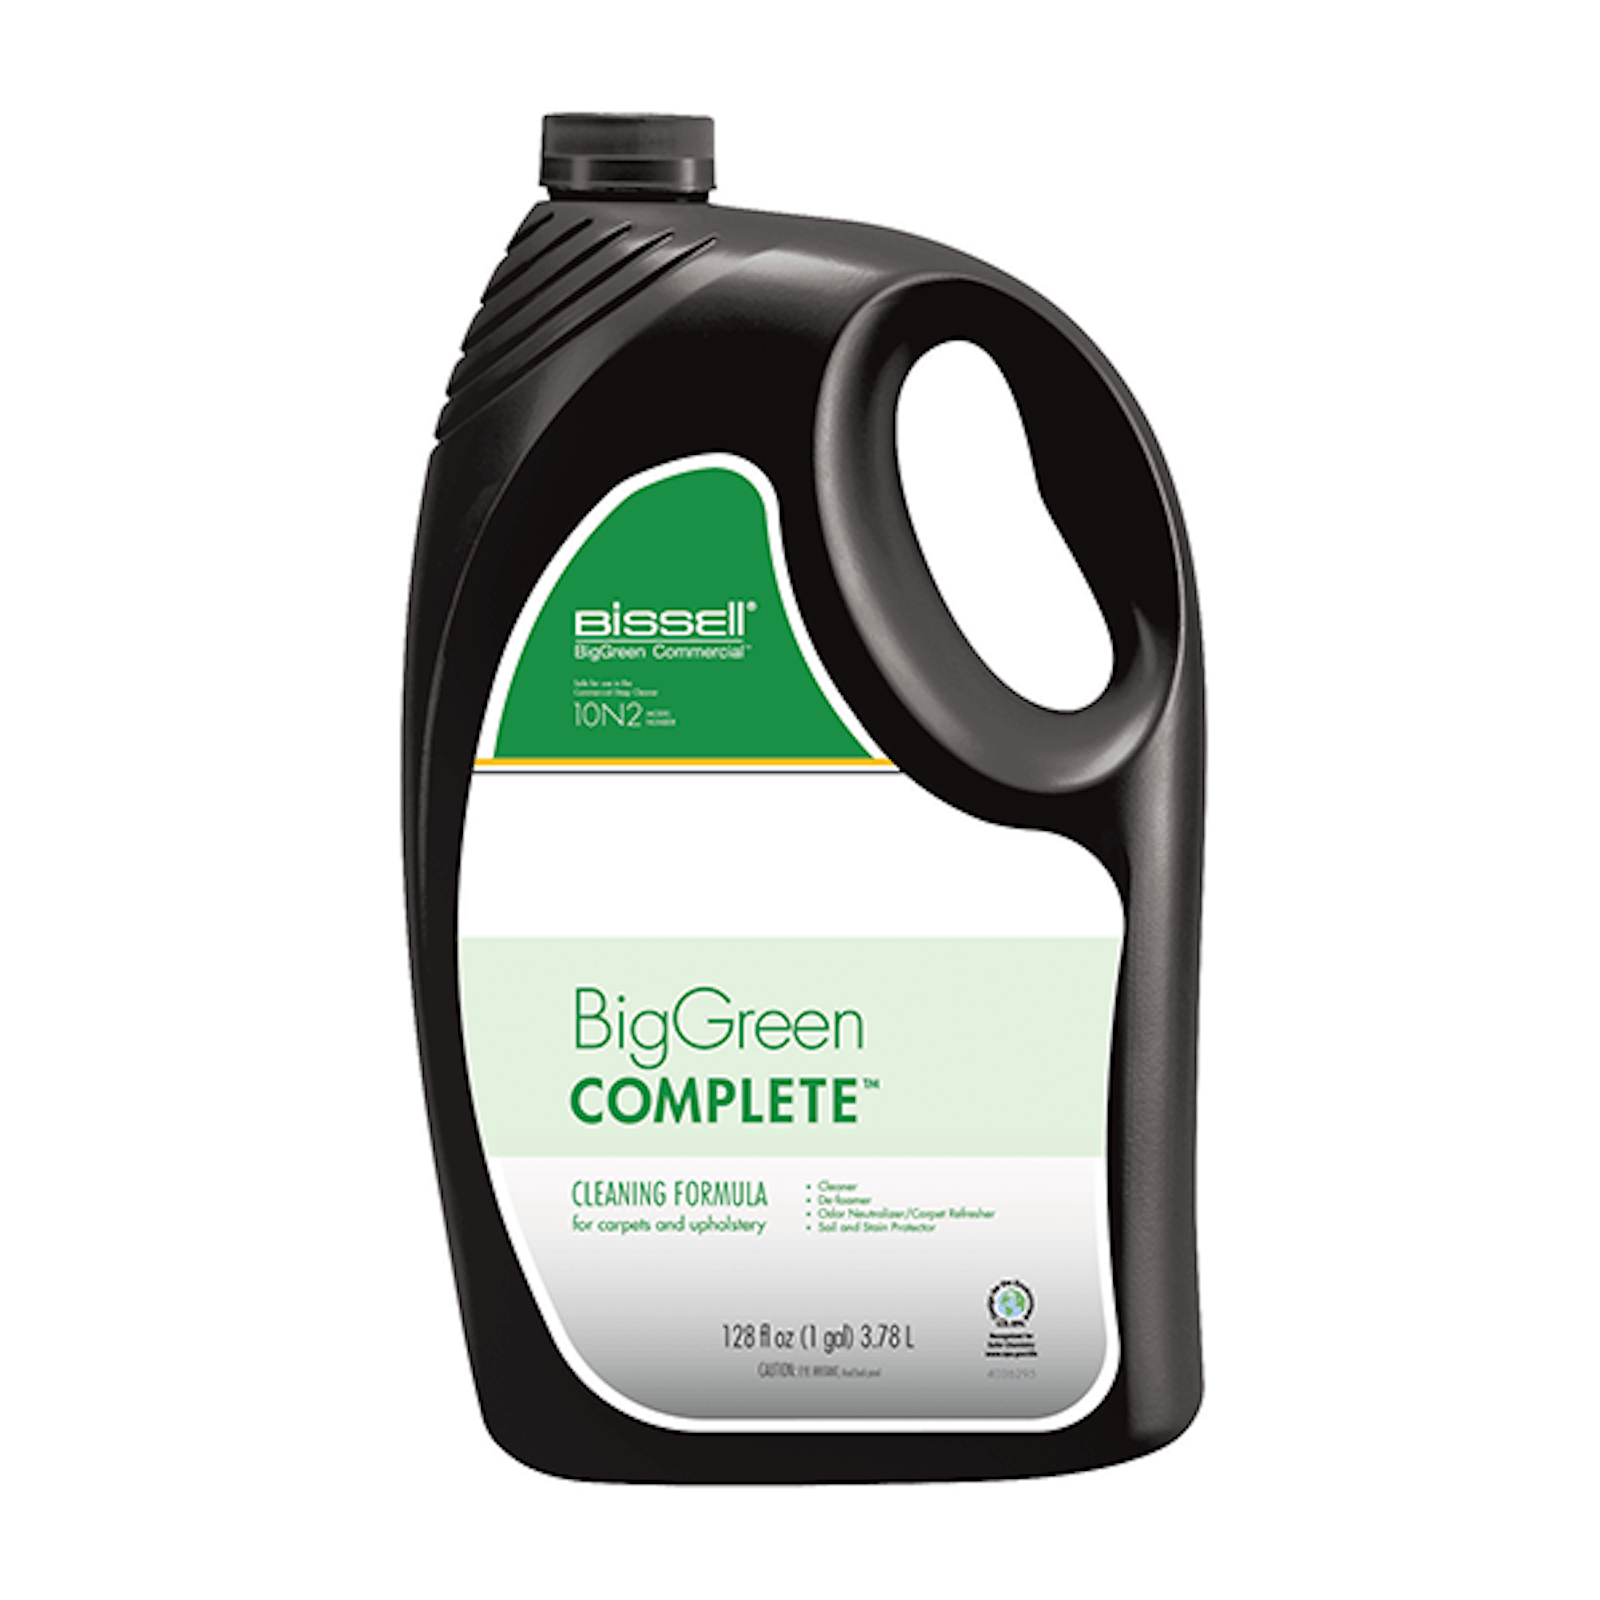 Cleaning completed. Bissell моющие средства. Bissell средство для моющих. Биссел жидкость для пылесоса. Bissell big Green clean.